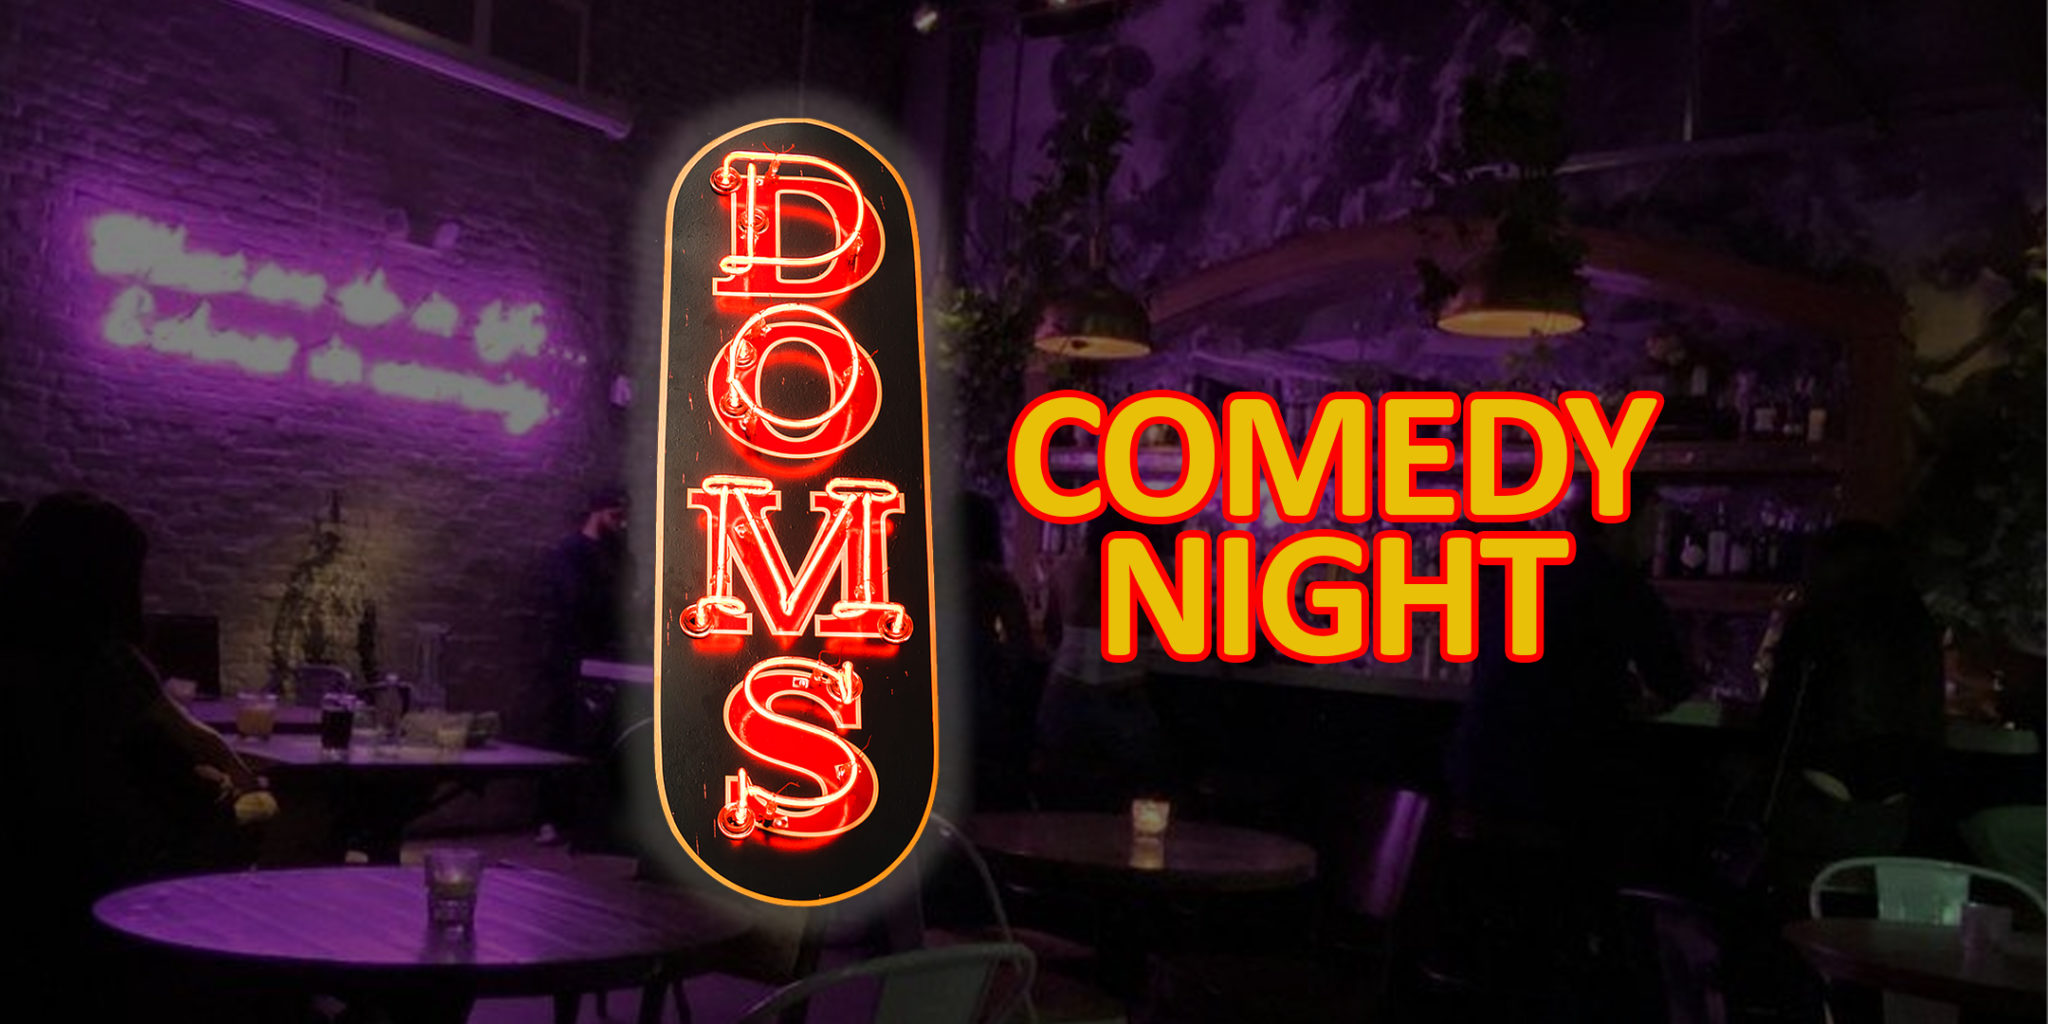 Doms Comedy Night